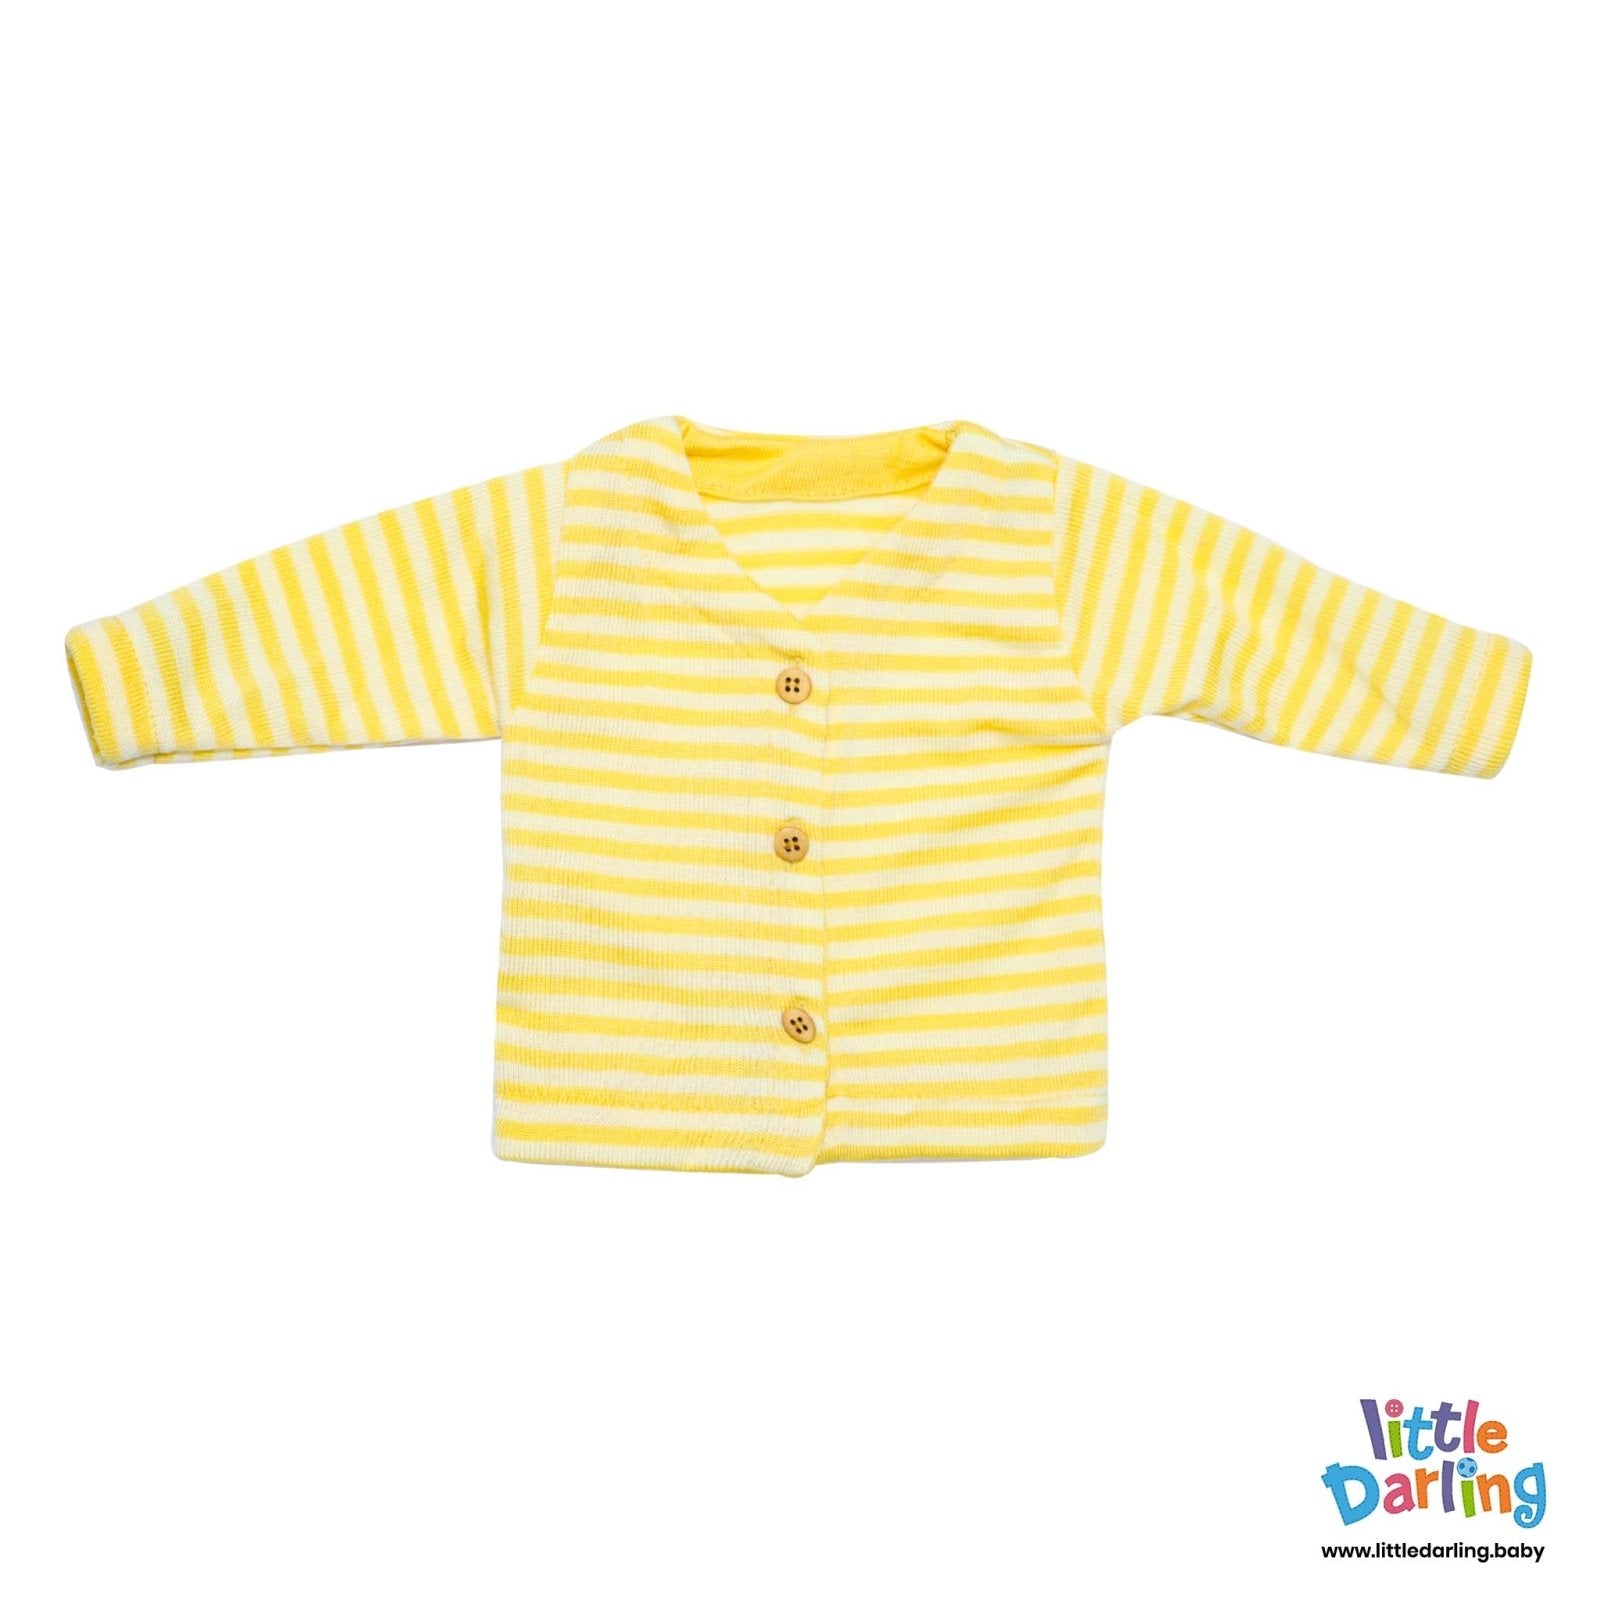 4 Pcs Woolen Gift Set White & Yellow Stripes by Little Darling